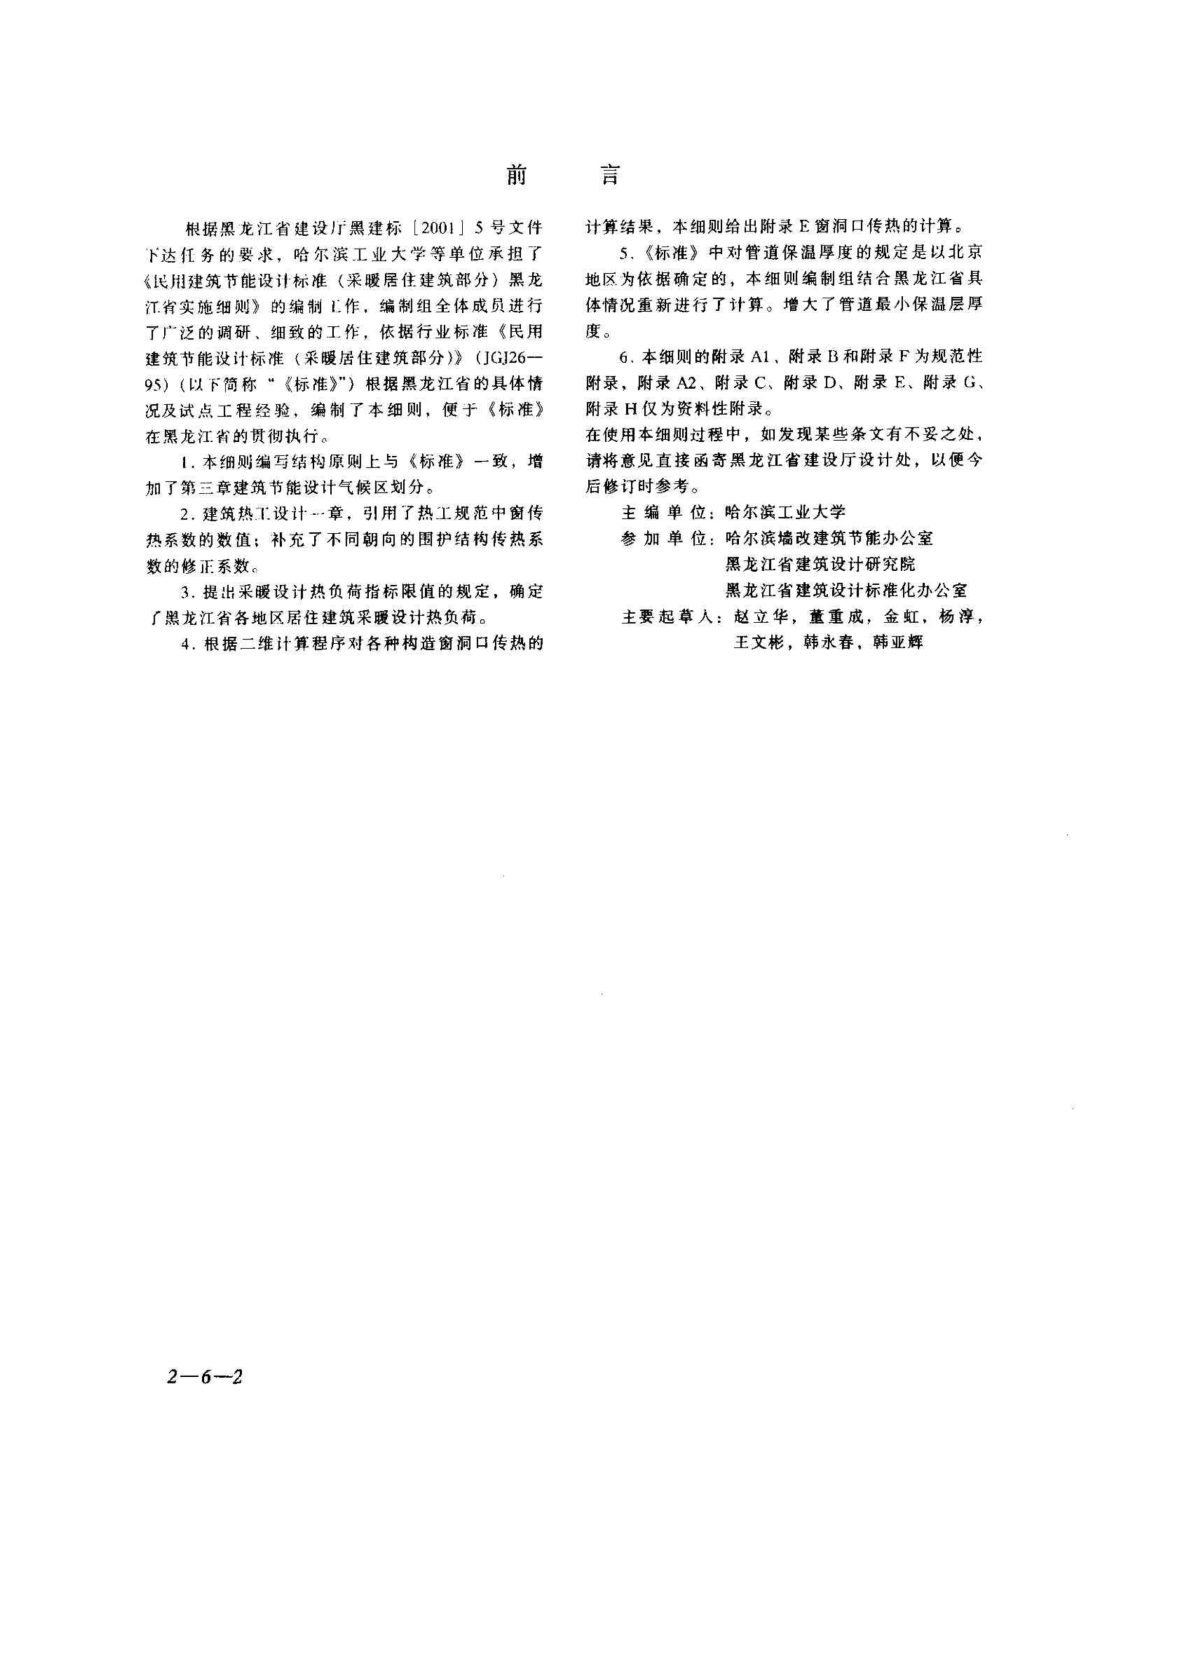 DB23 T120-2001 黑龙江省民用建筑节能设计标准实施细则（采暖居住建筑部分）-图一